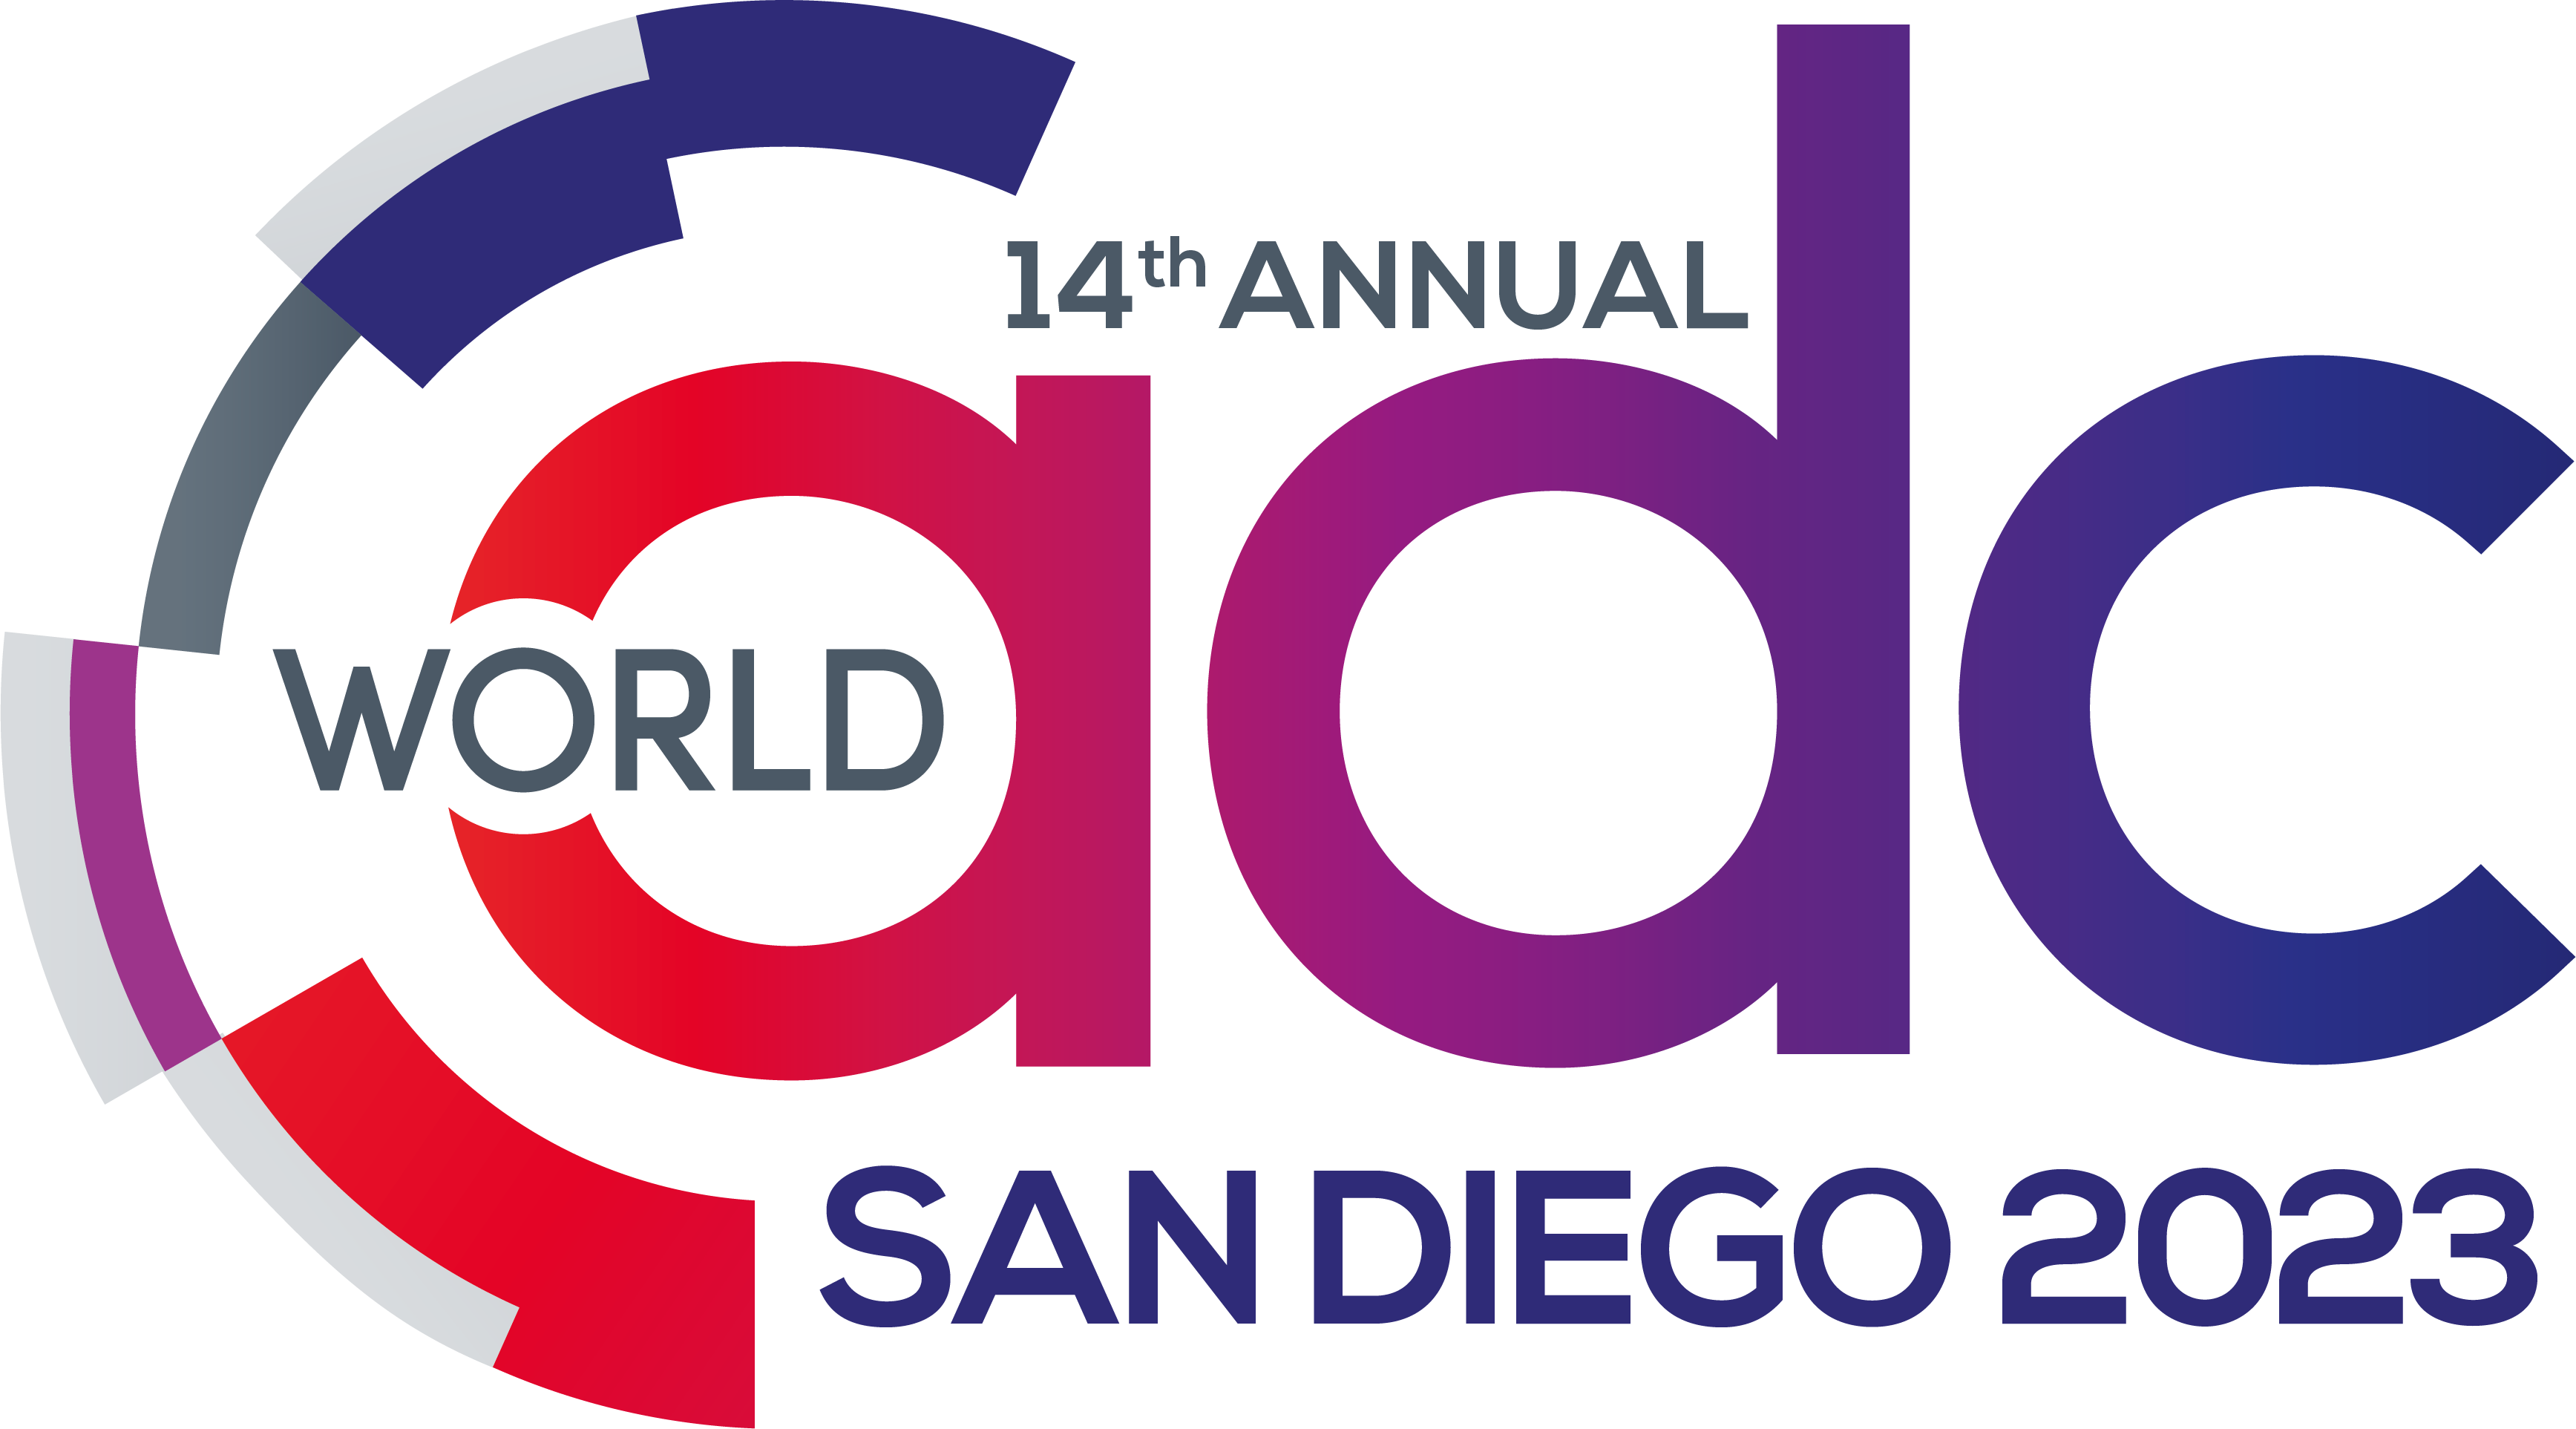 MadWorld 2023 San Diego Call For Presentations